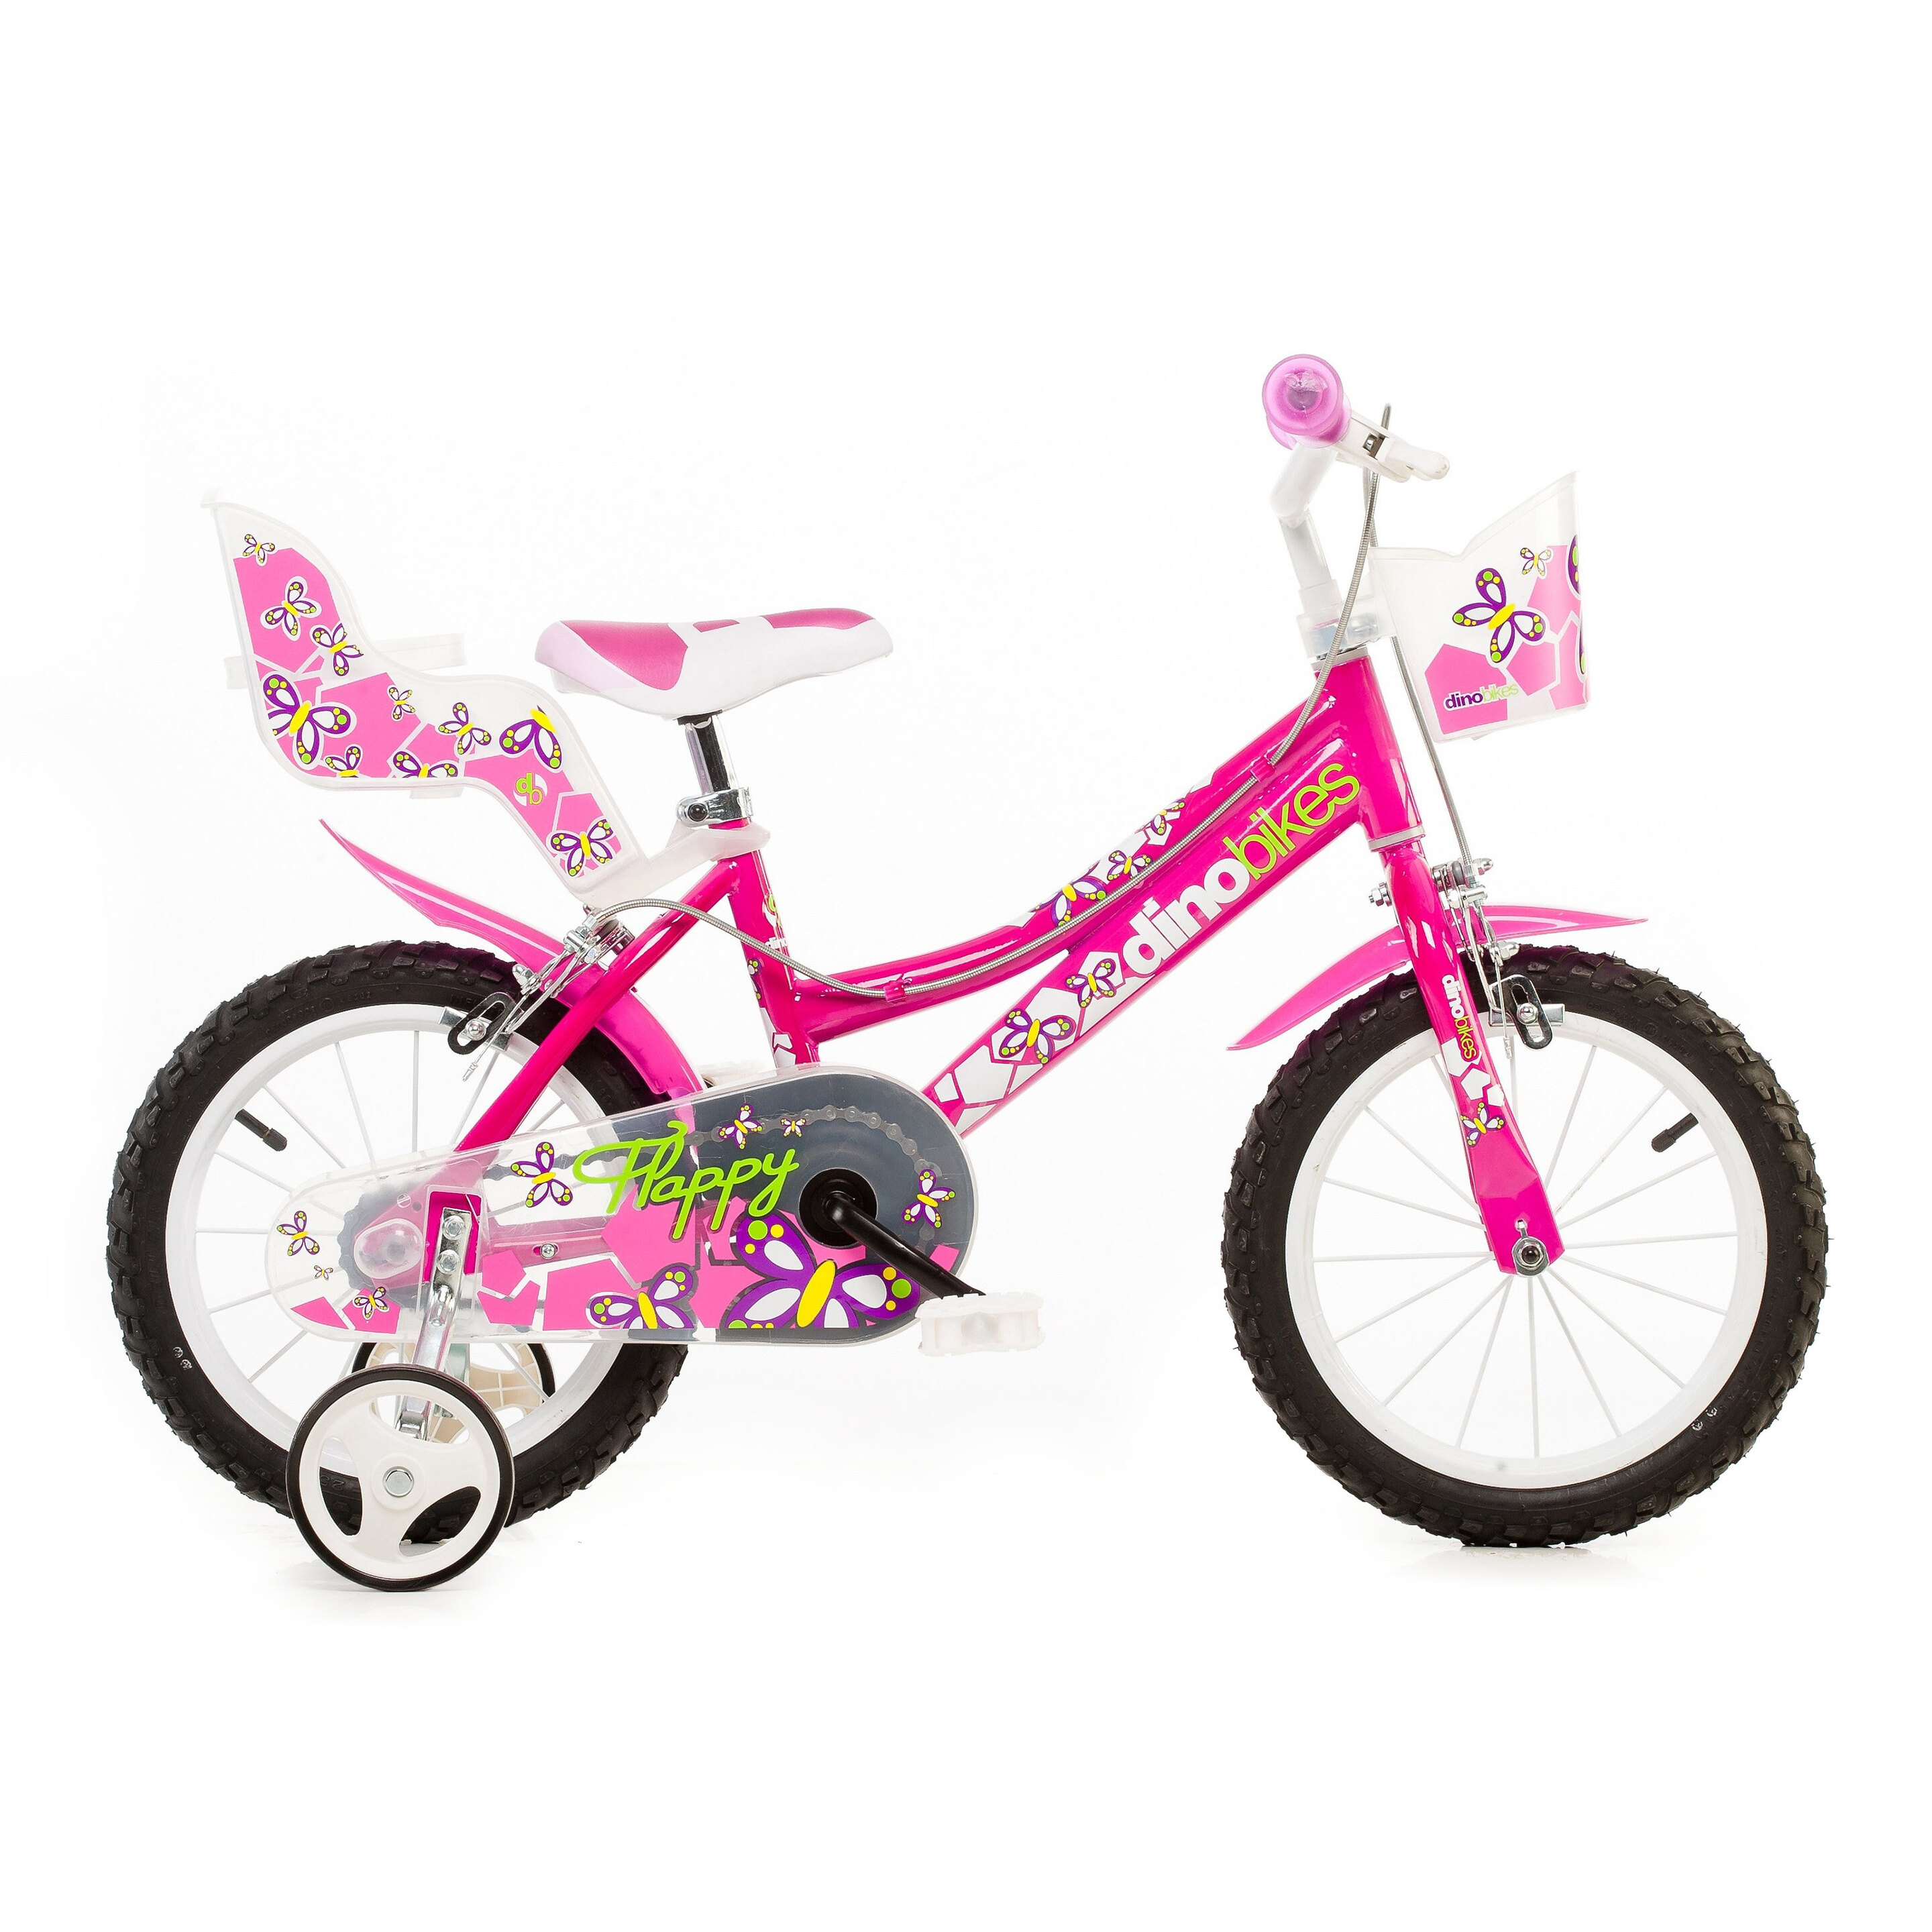 Bicicleta Infantil Happy 14 Pulgadas